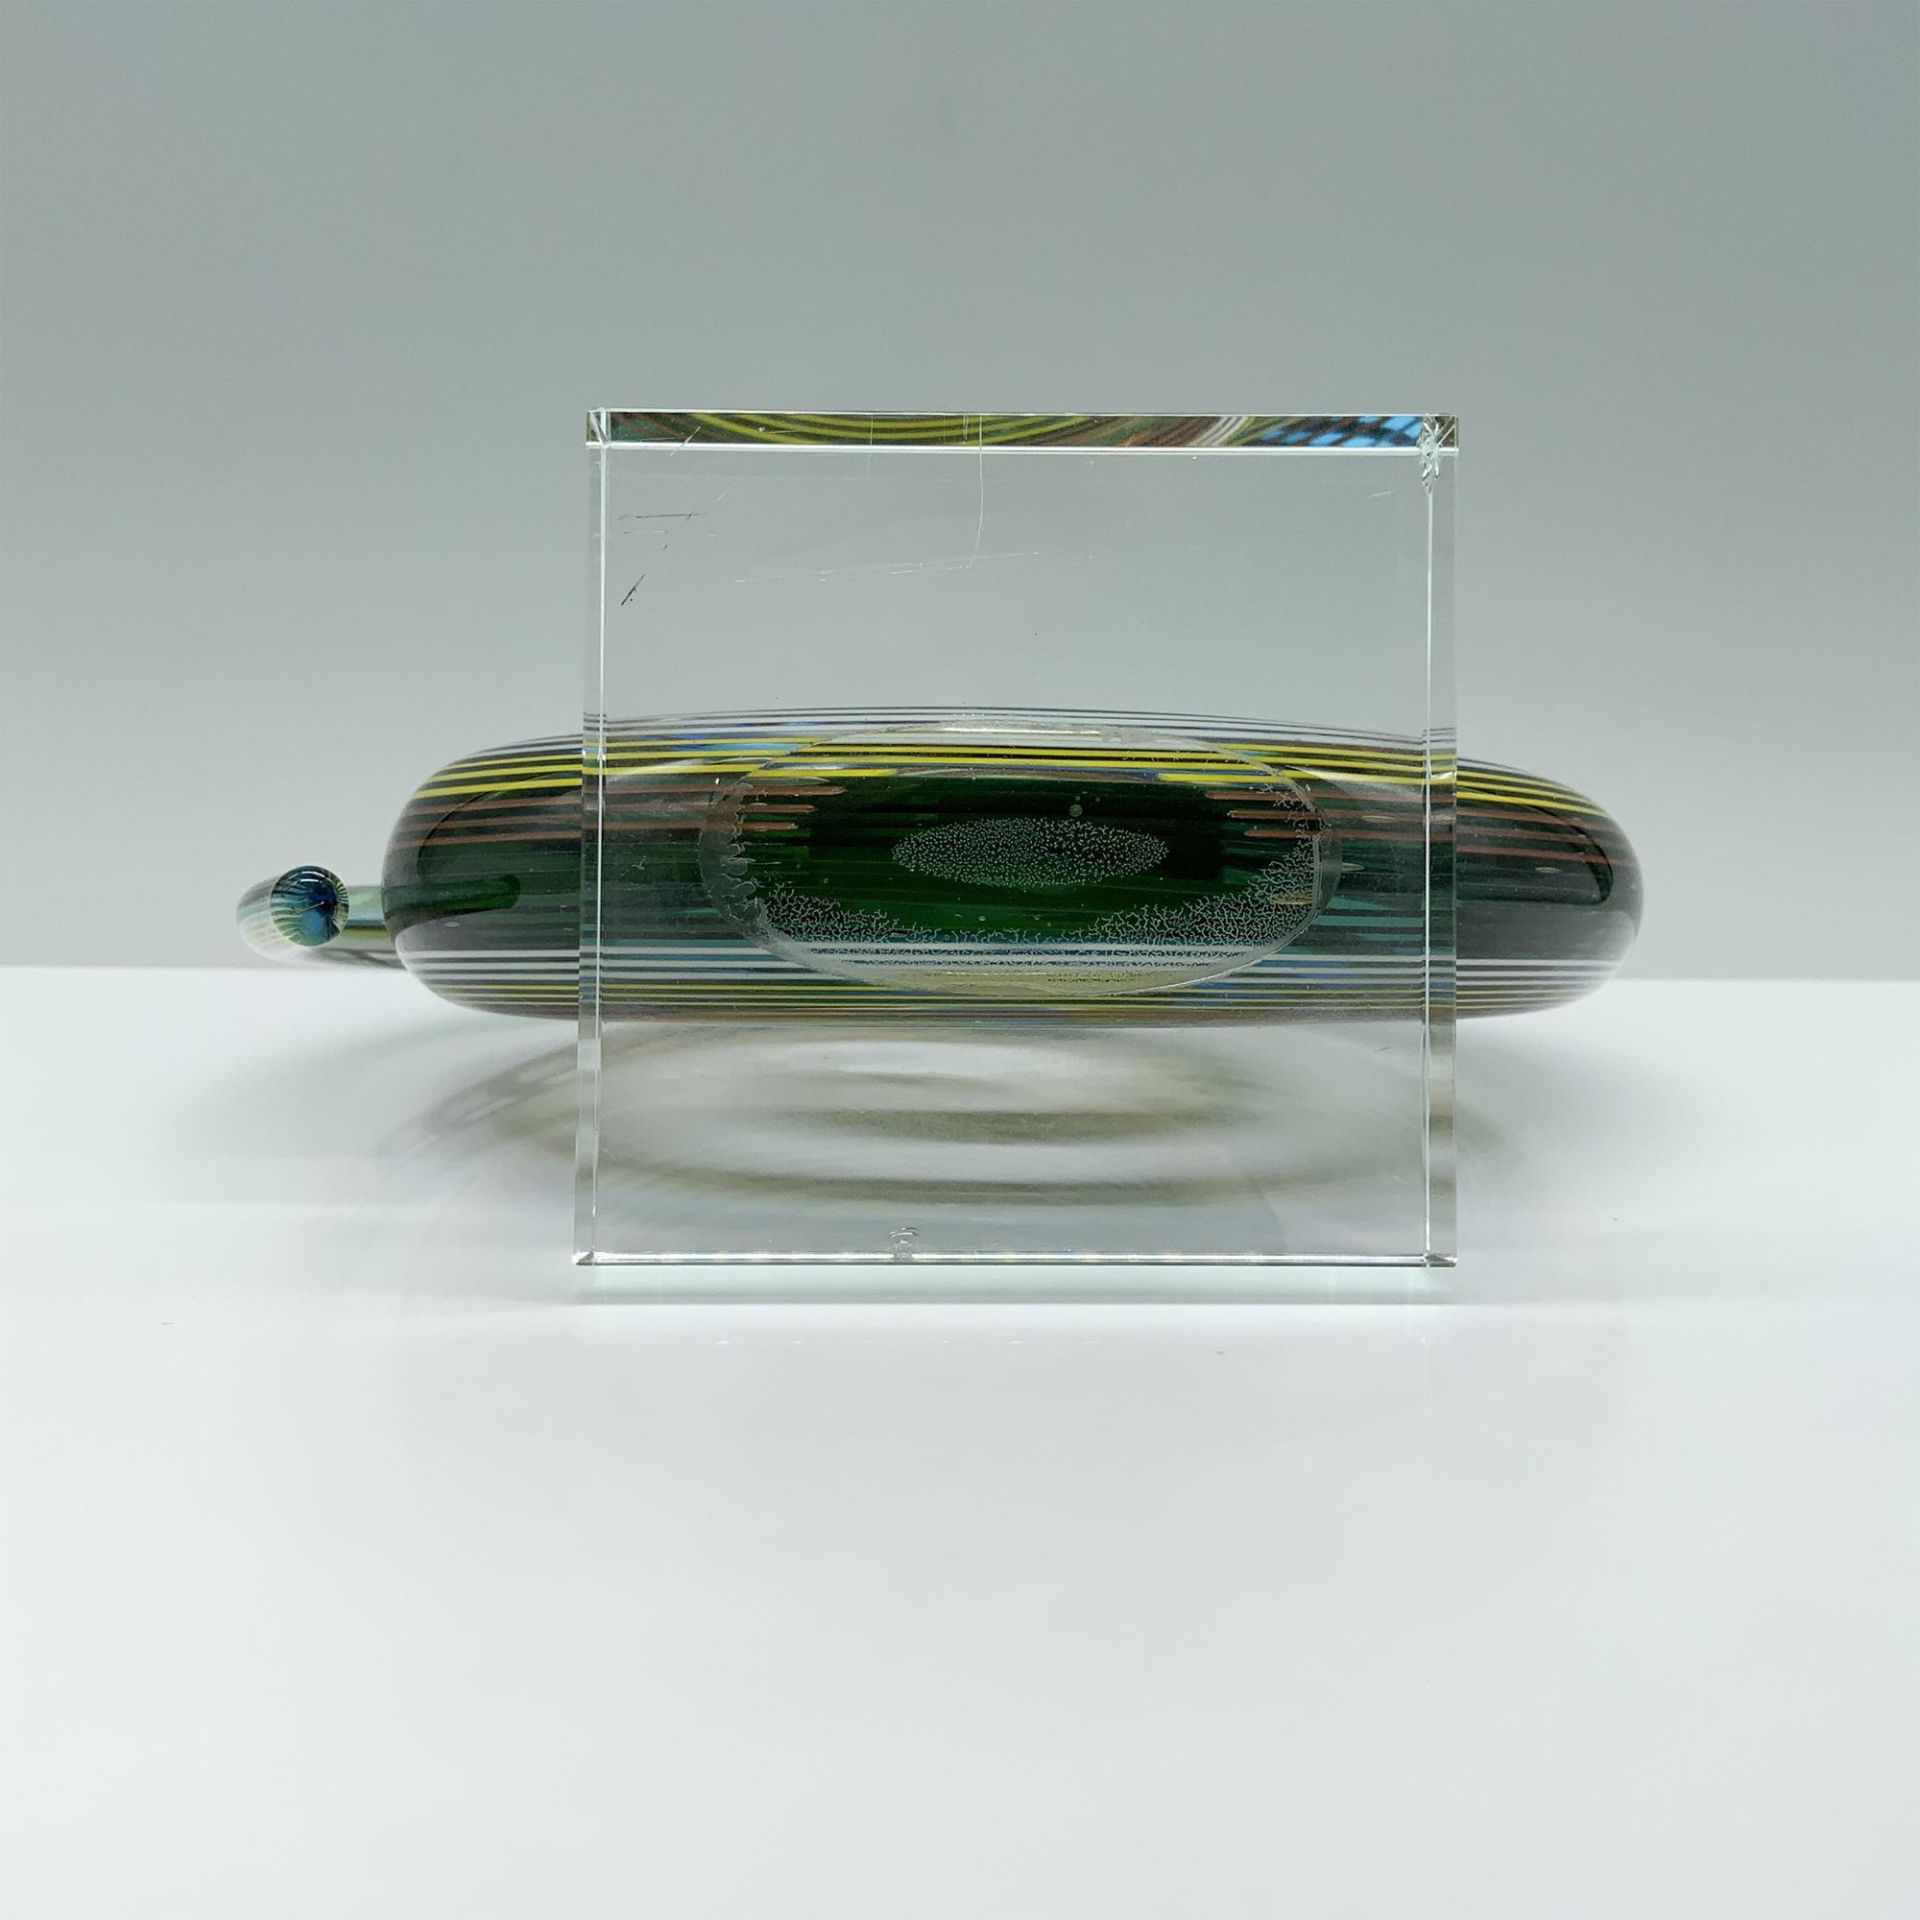 Murano Glassware Art Spiral Sculpture - Image 3 of 3